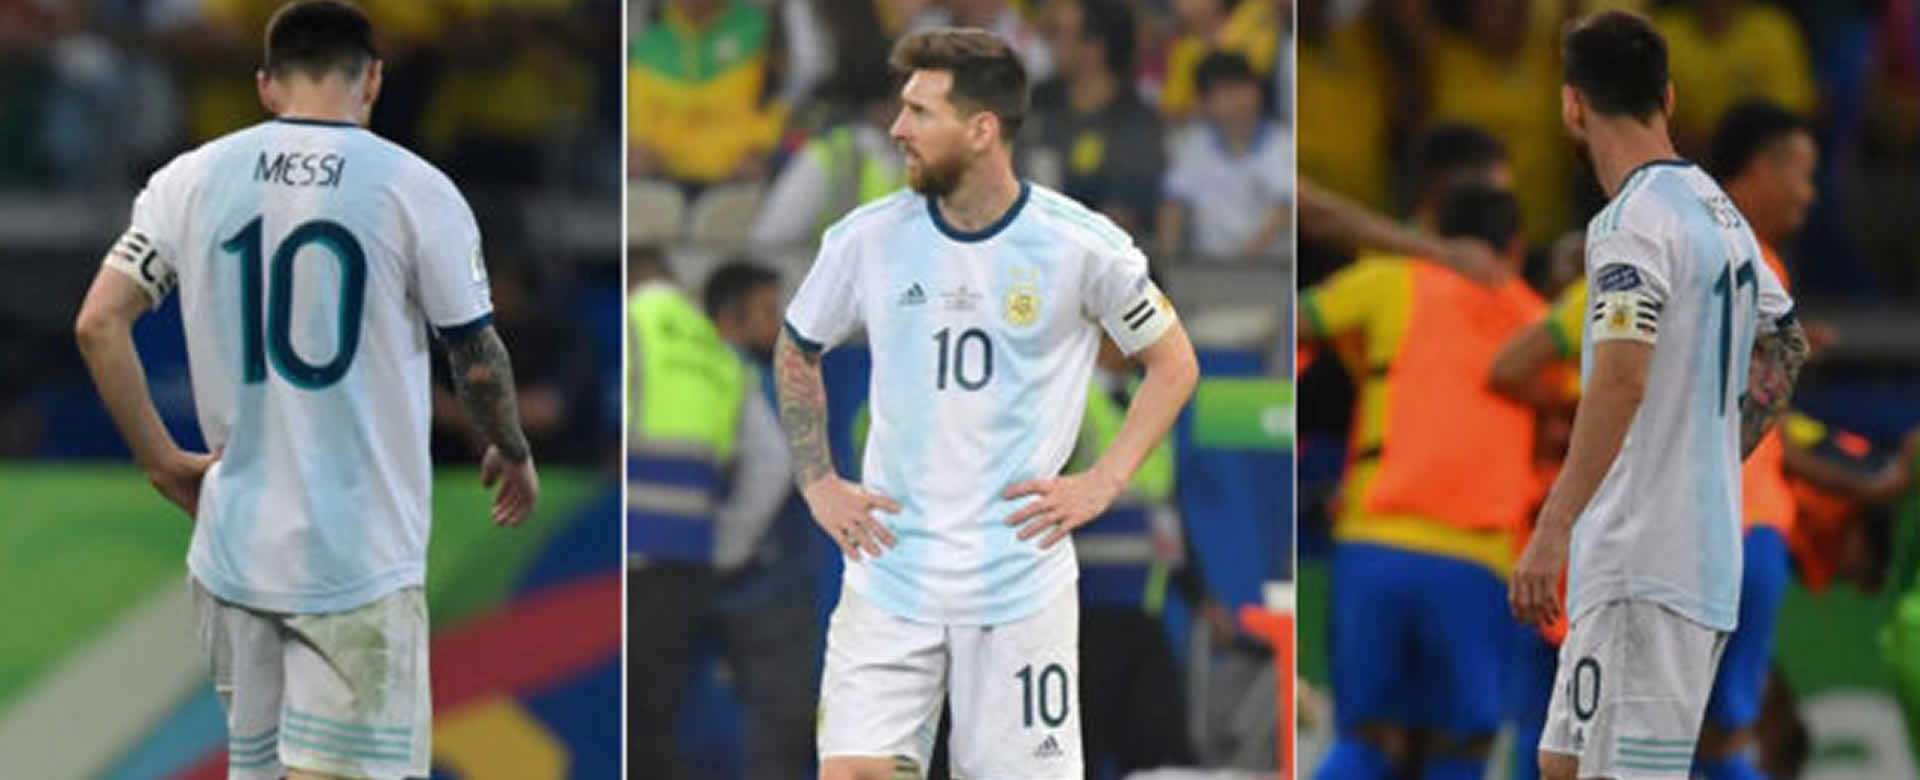 Messi explota contra el árbitro tras la derrota contra Brasil